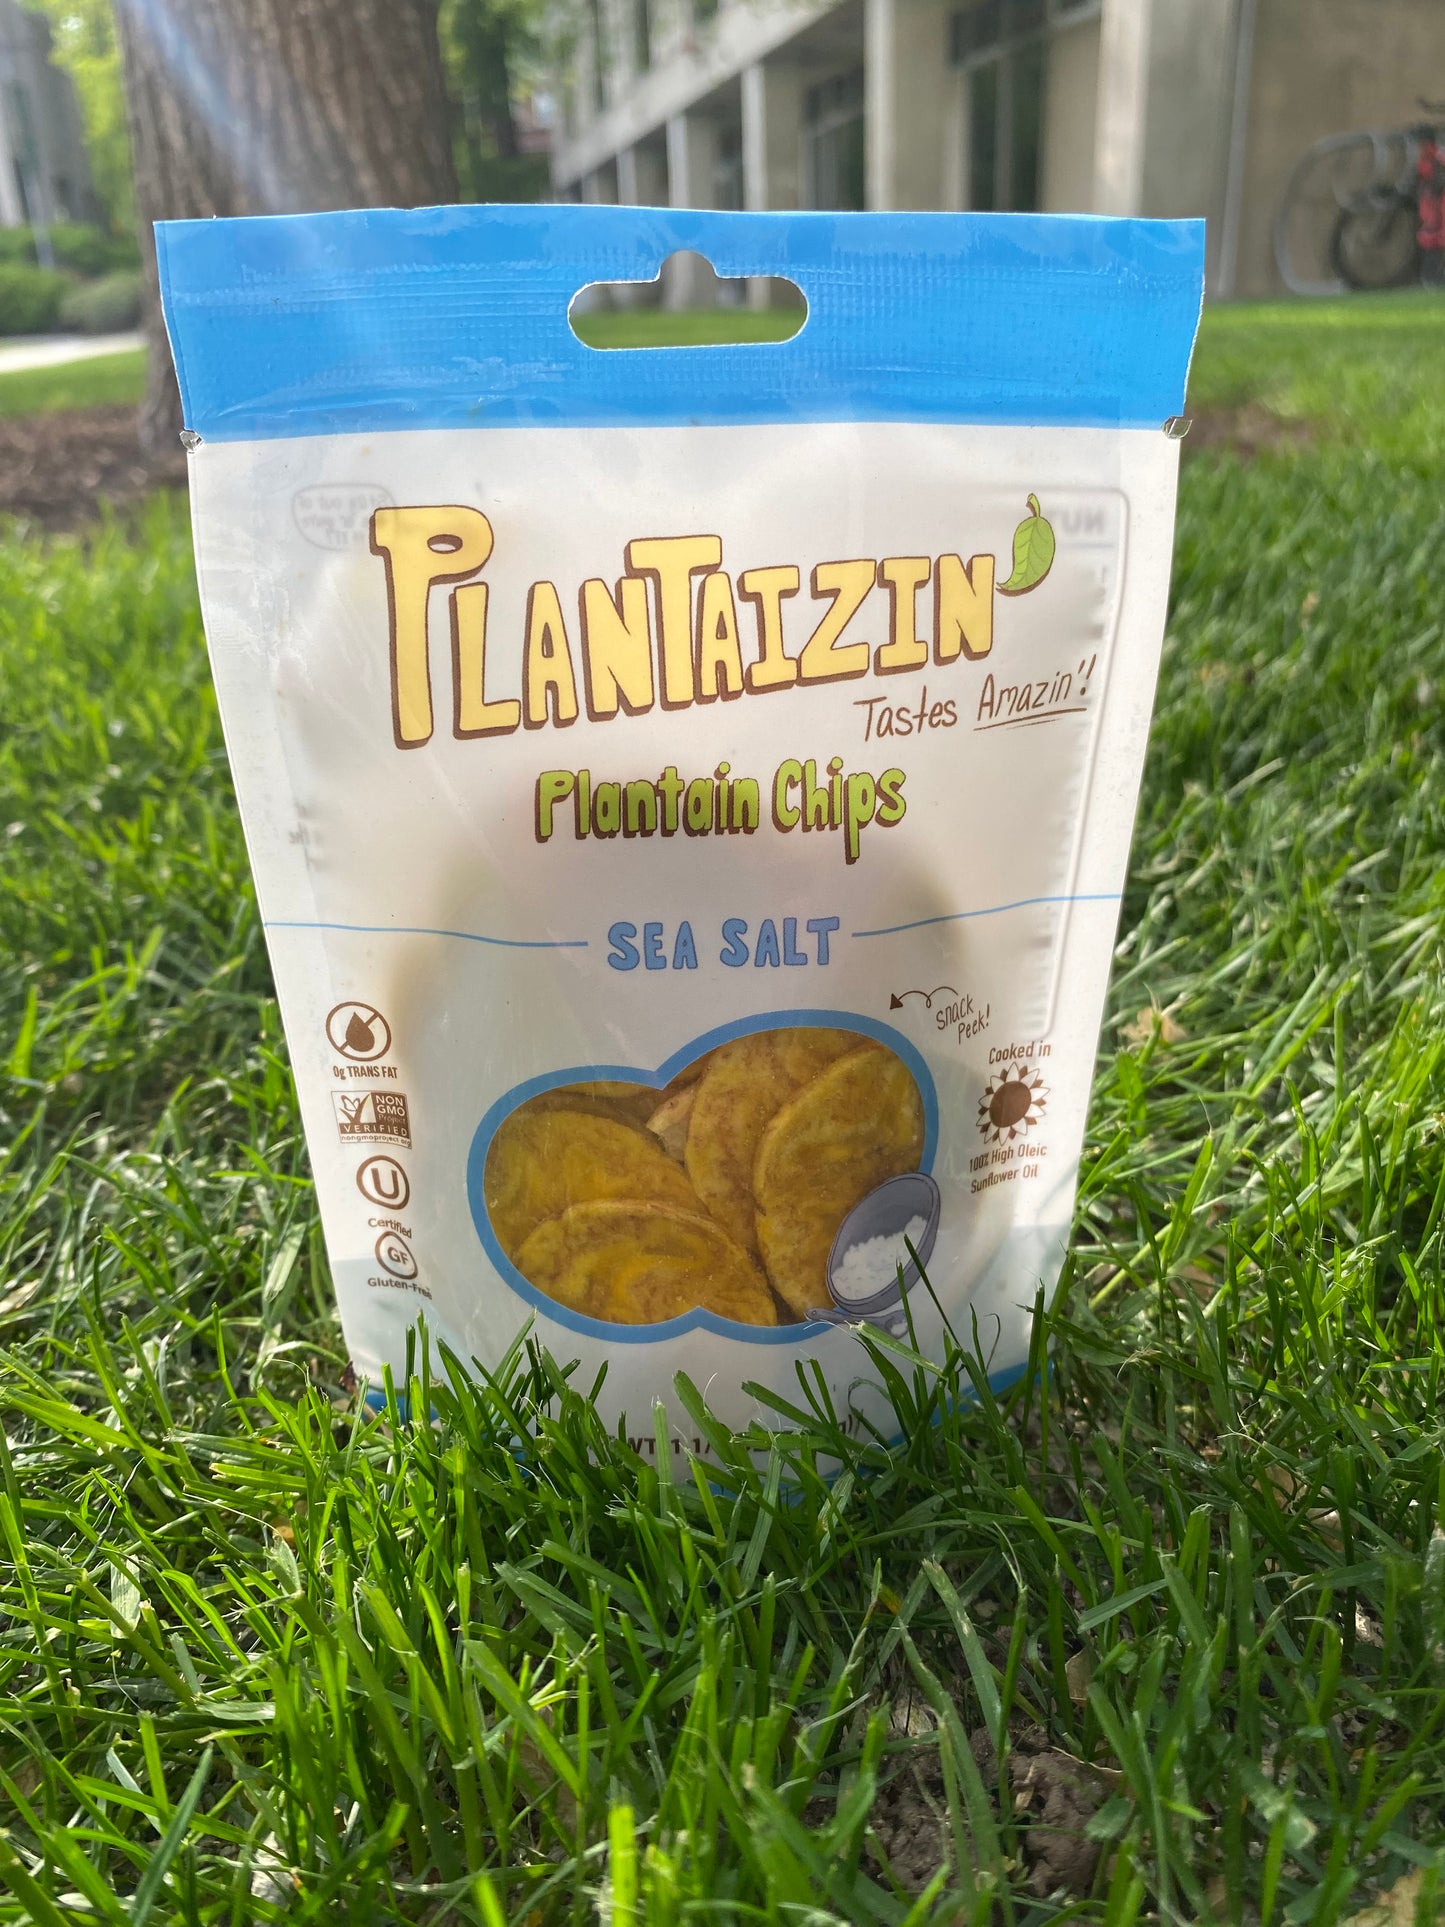 Plantaizin' Plantain Chips - Sea Salt, 1.25oz (12 pack)